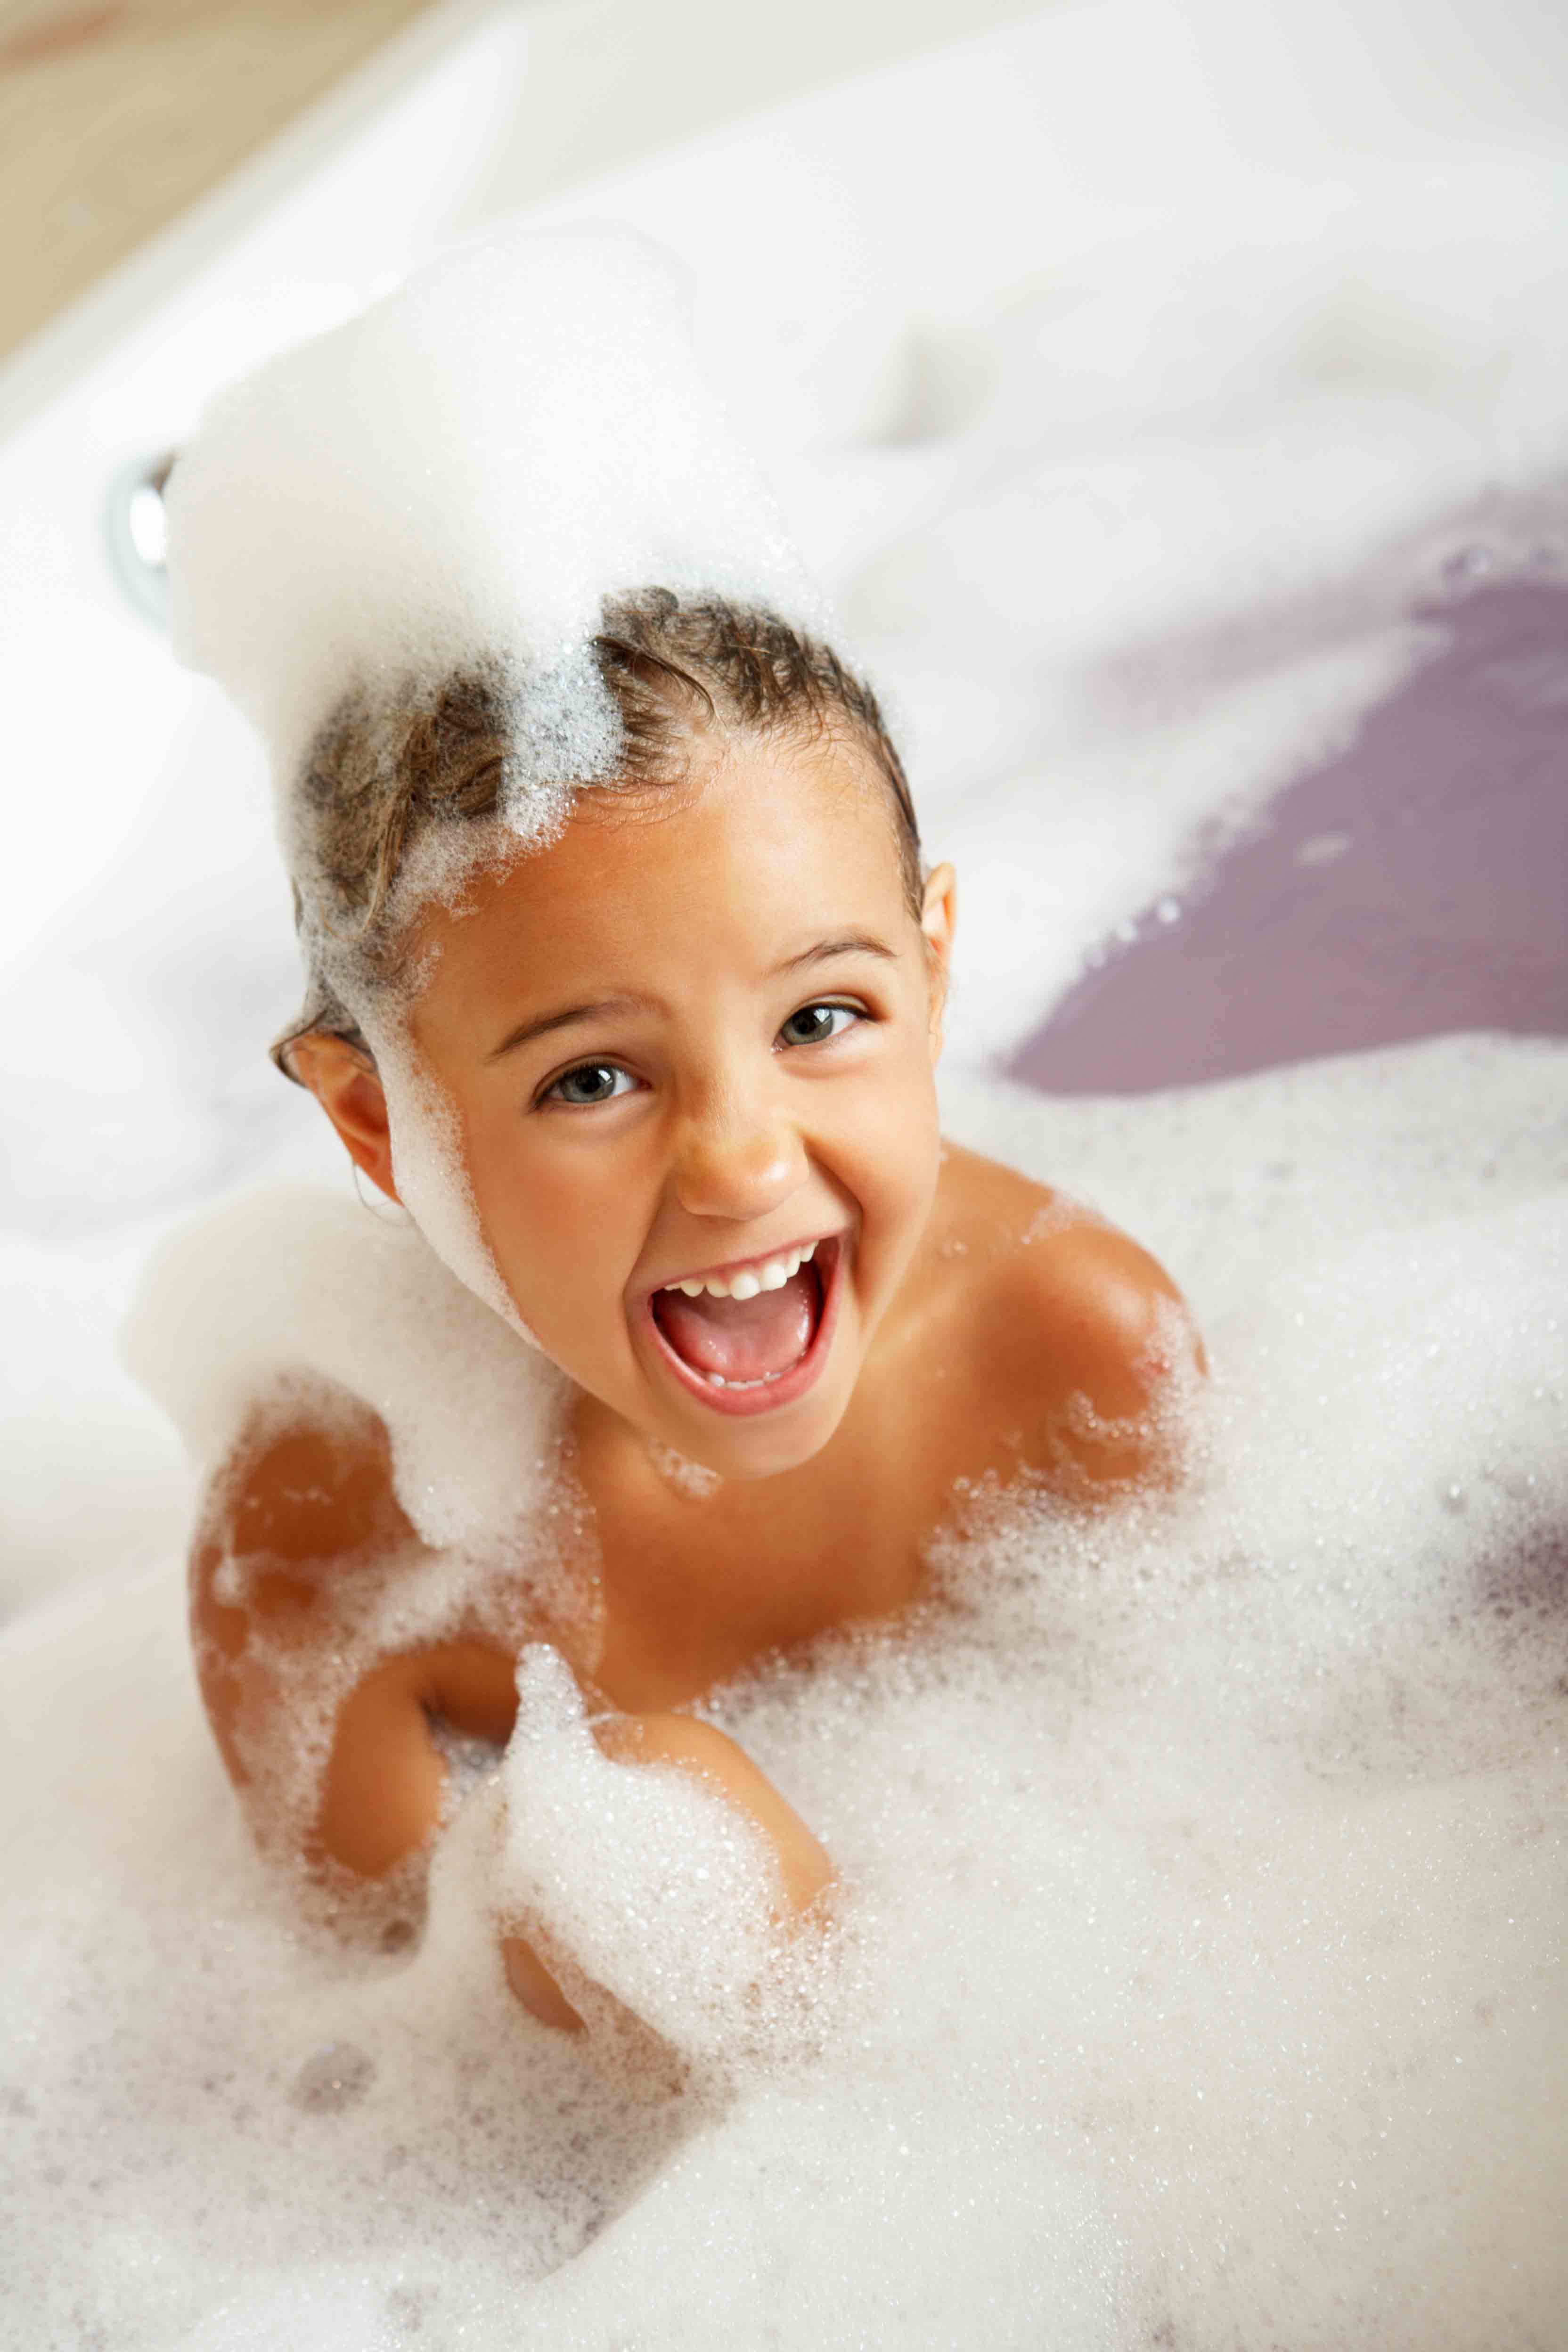 Bathtub Fun: Bath Time Rituals to Put Kids to Bed - MAUI ...